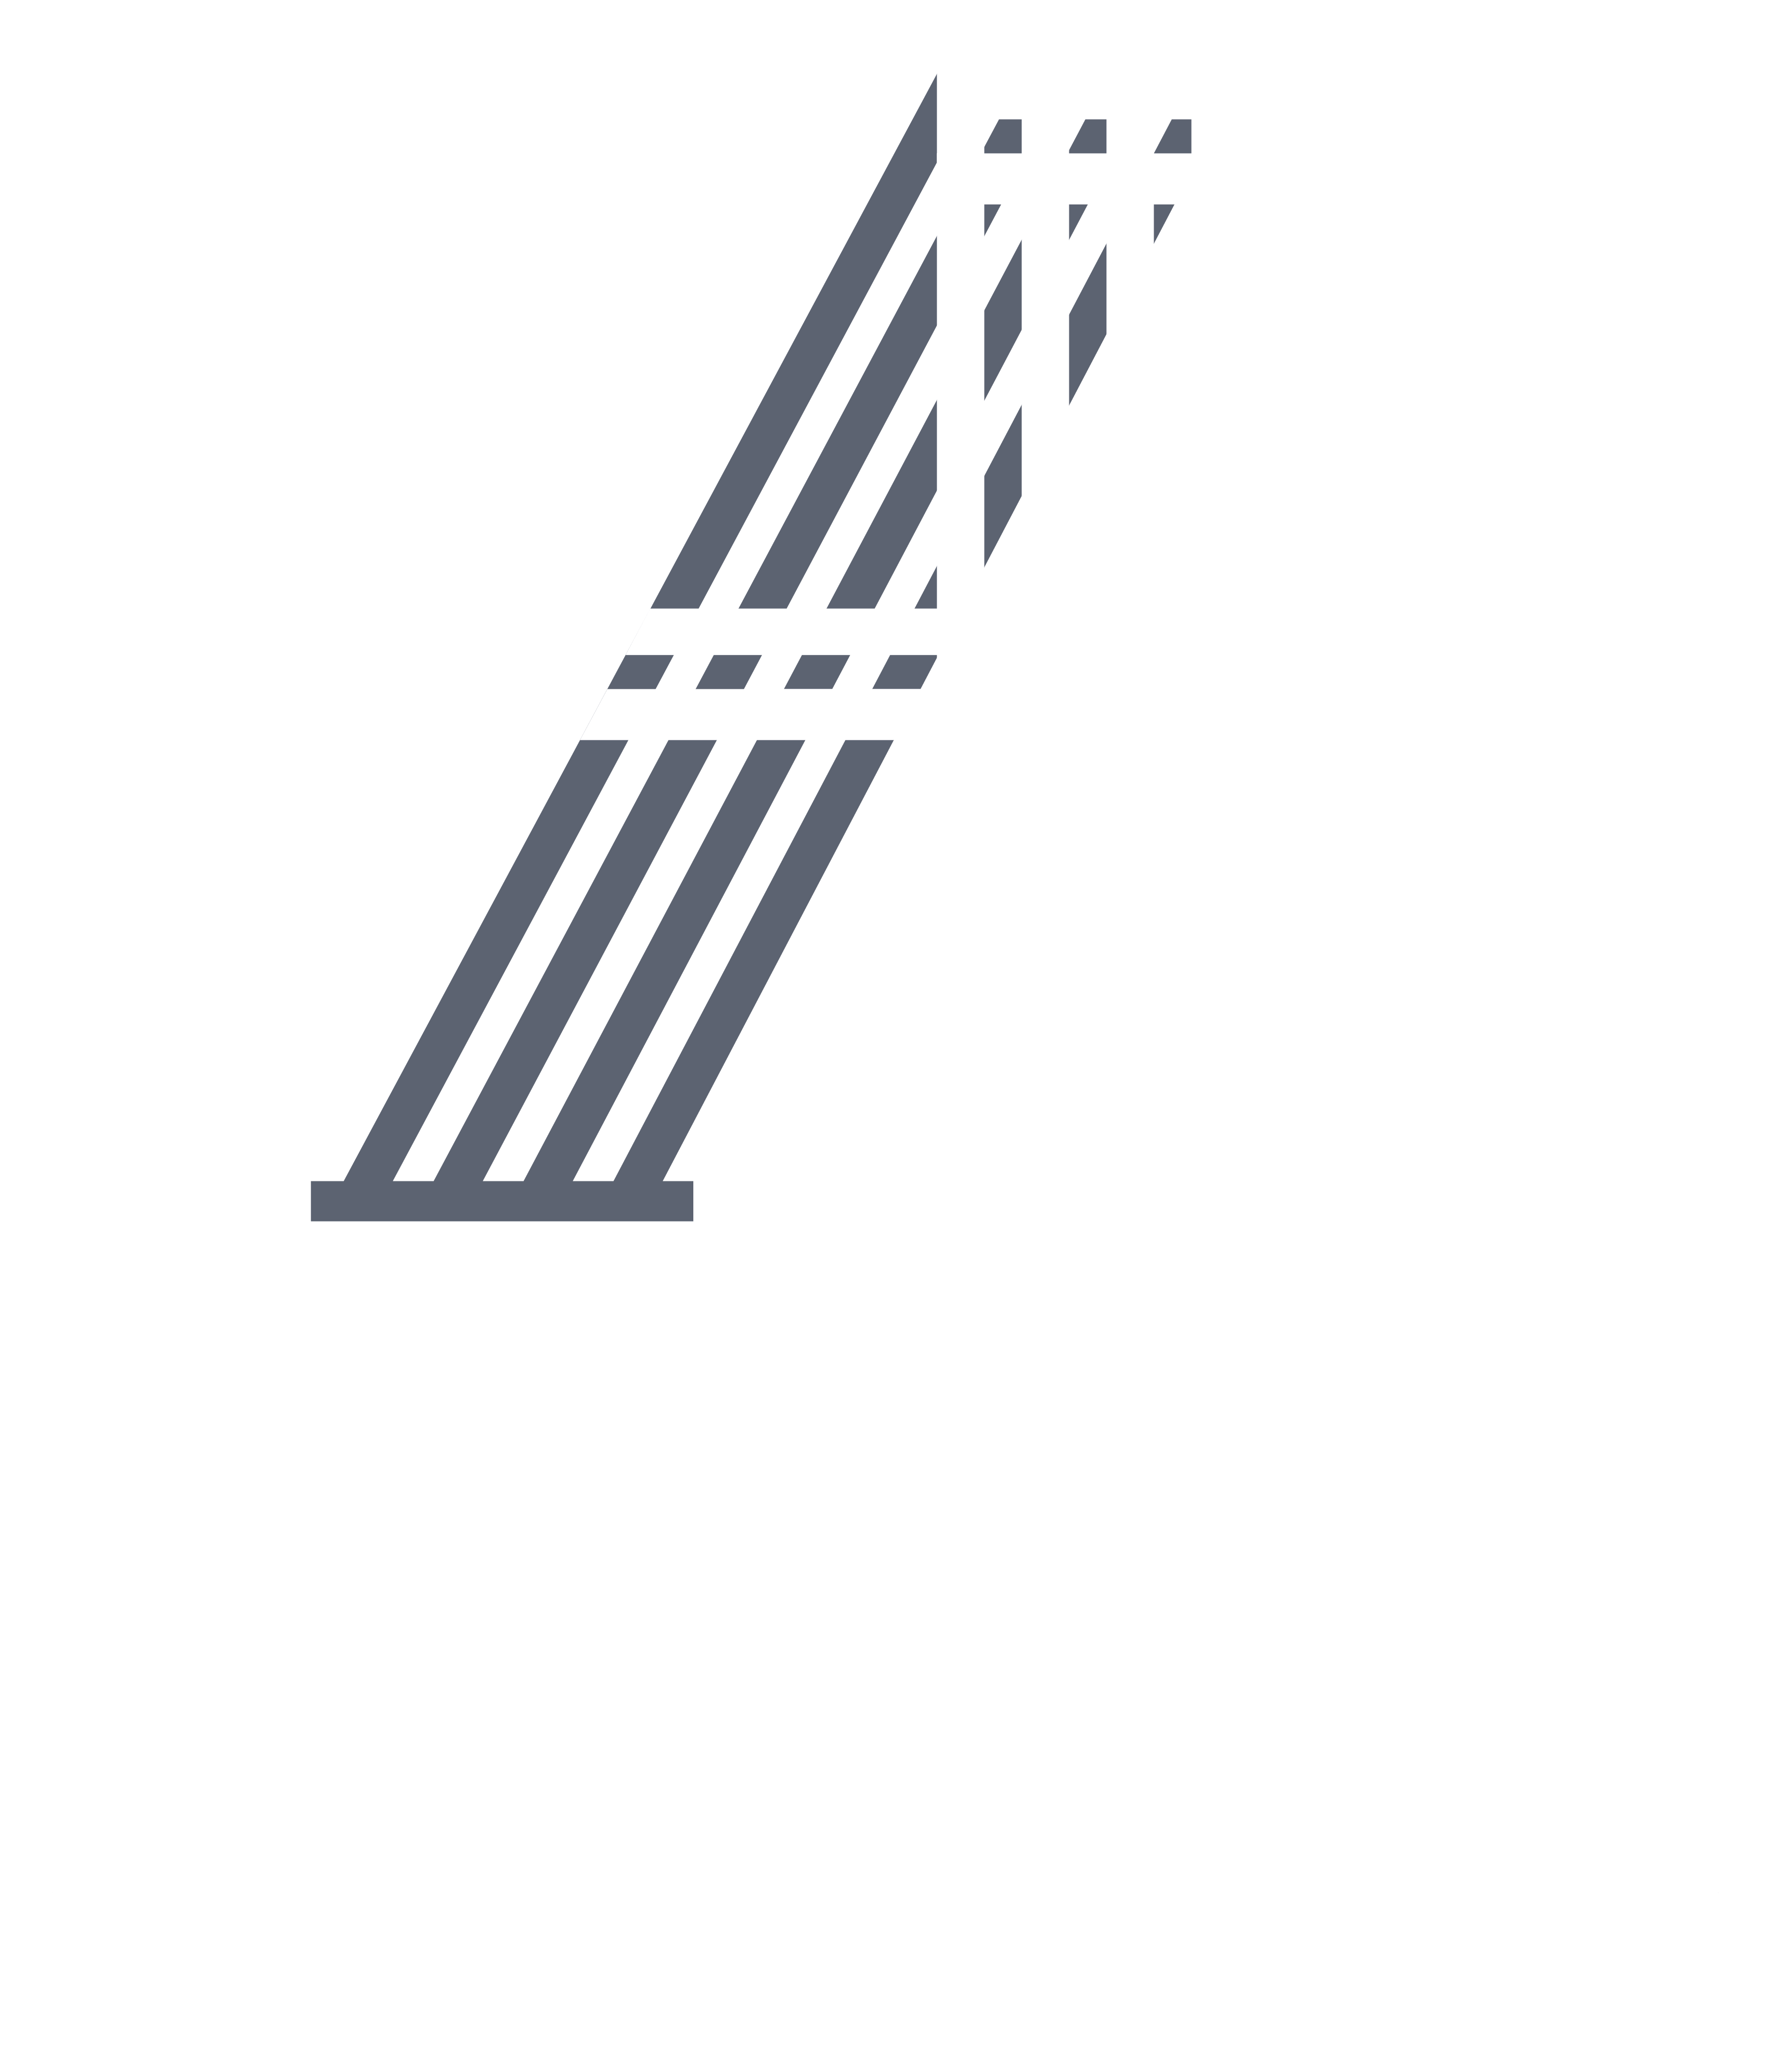 Fedders Construction